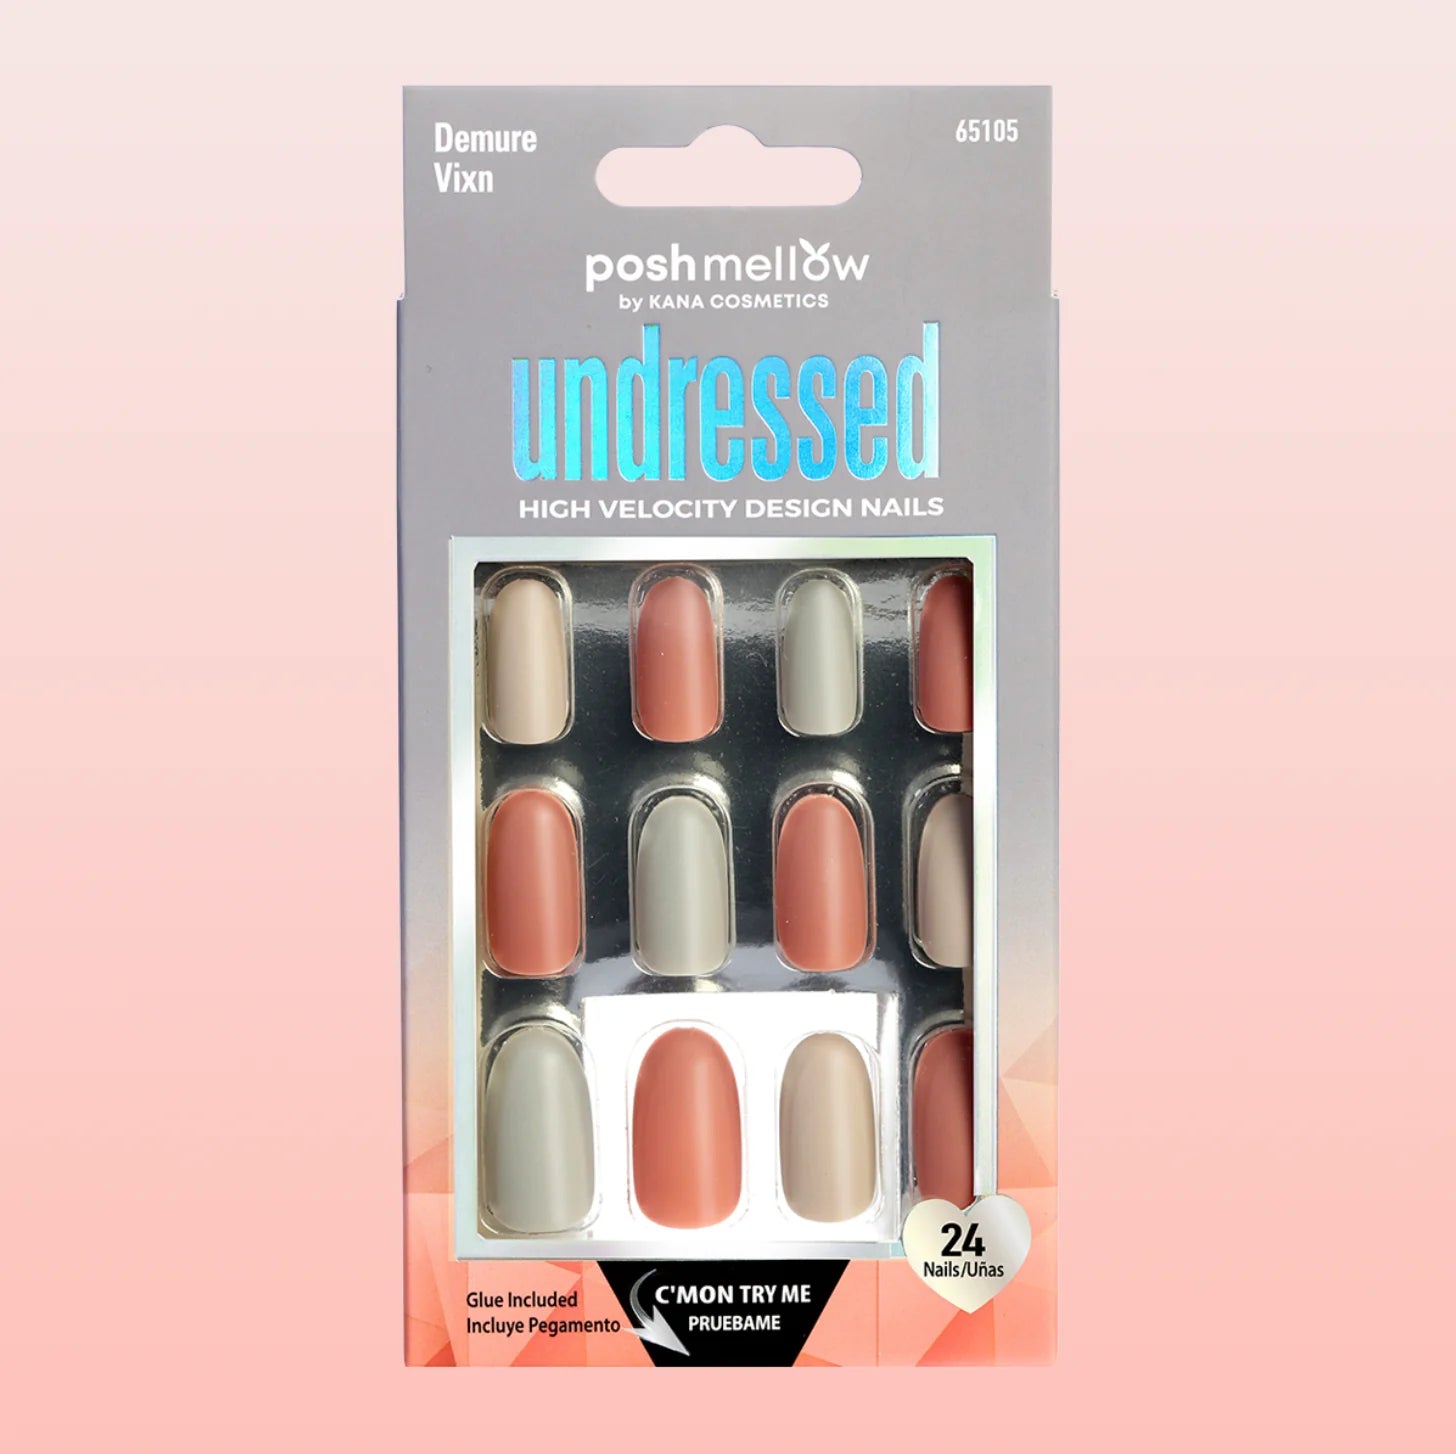 Poshmellow by Kana Cosmetics Undressed 24 Nails #65105 Demure Vixn